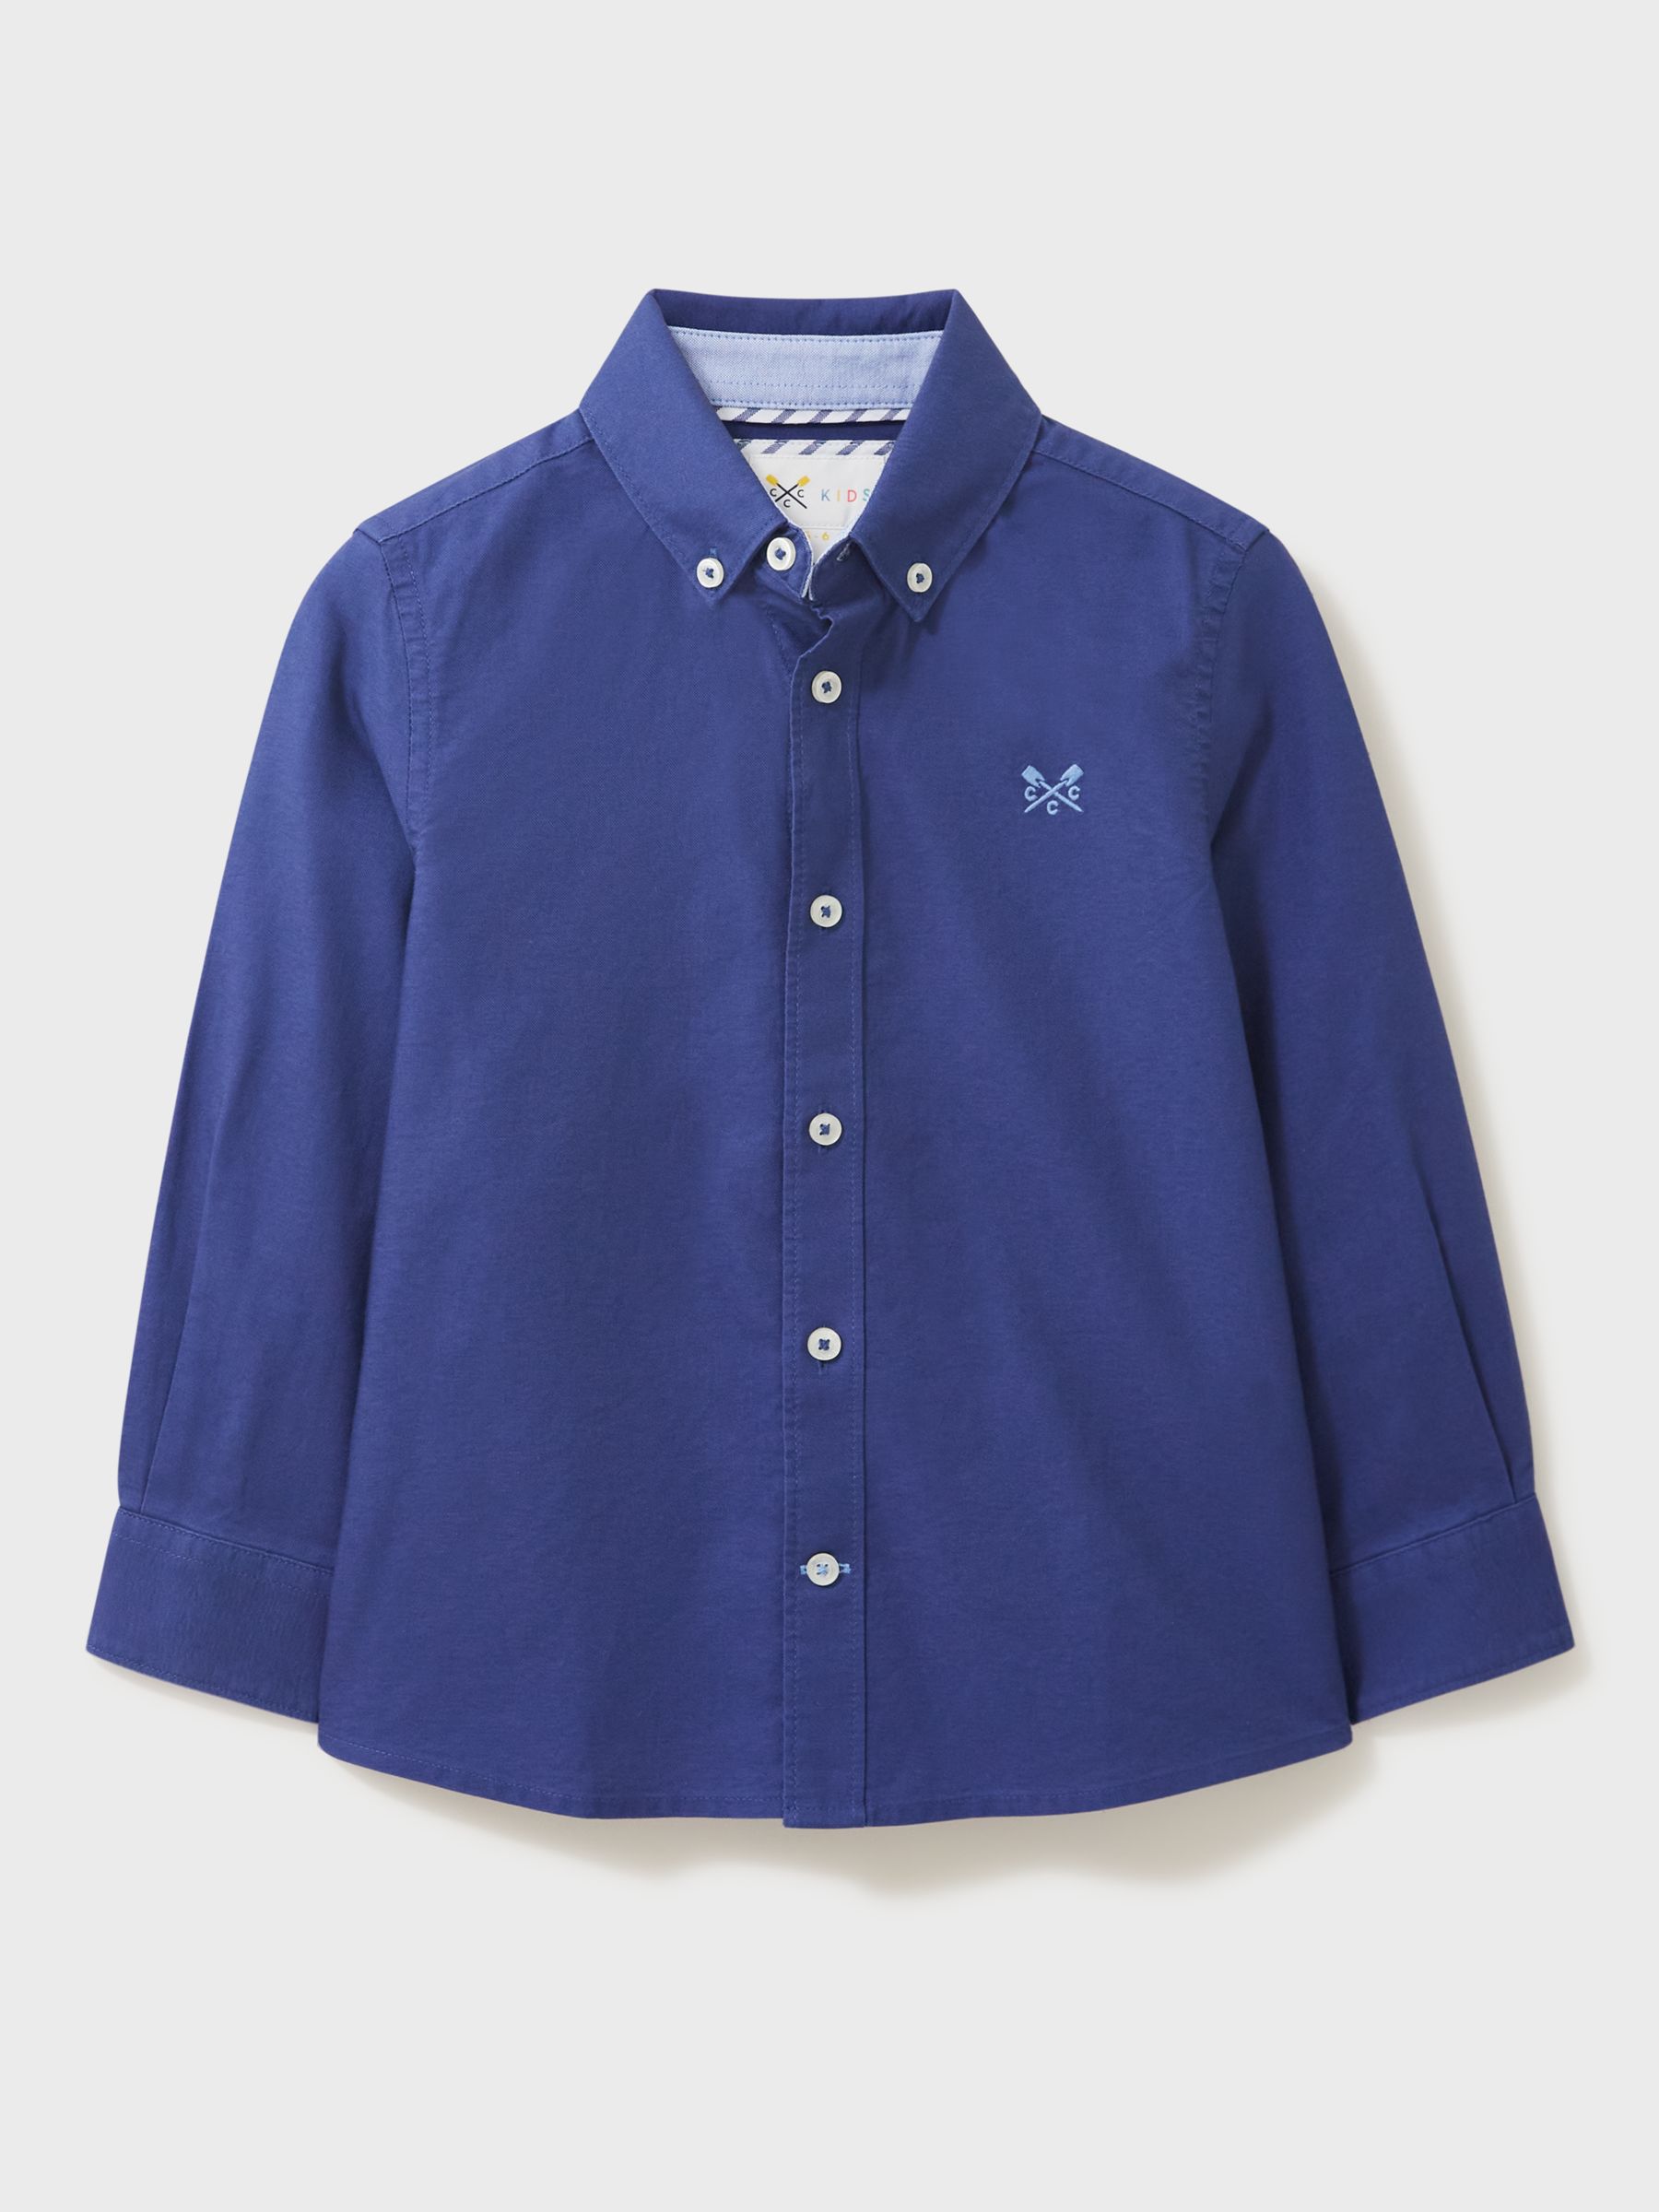 Crew Clothing Kids' Mini-Me Oxford Shirt, Navy Blue at John Lewis ...